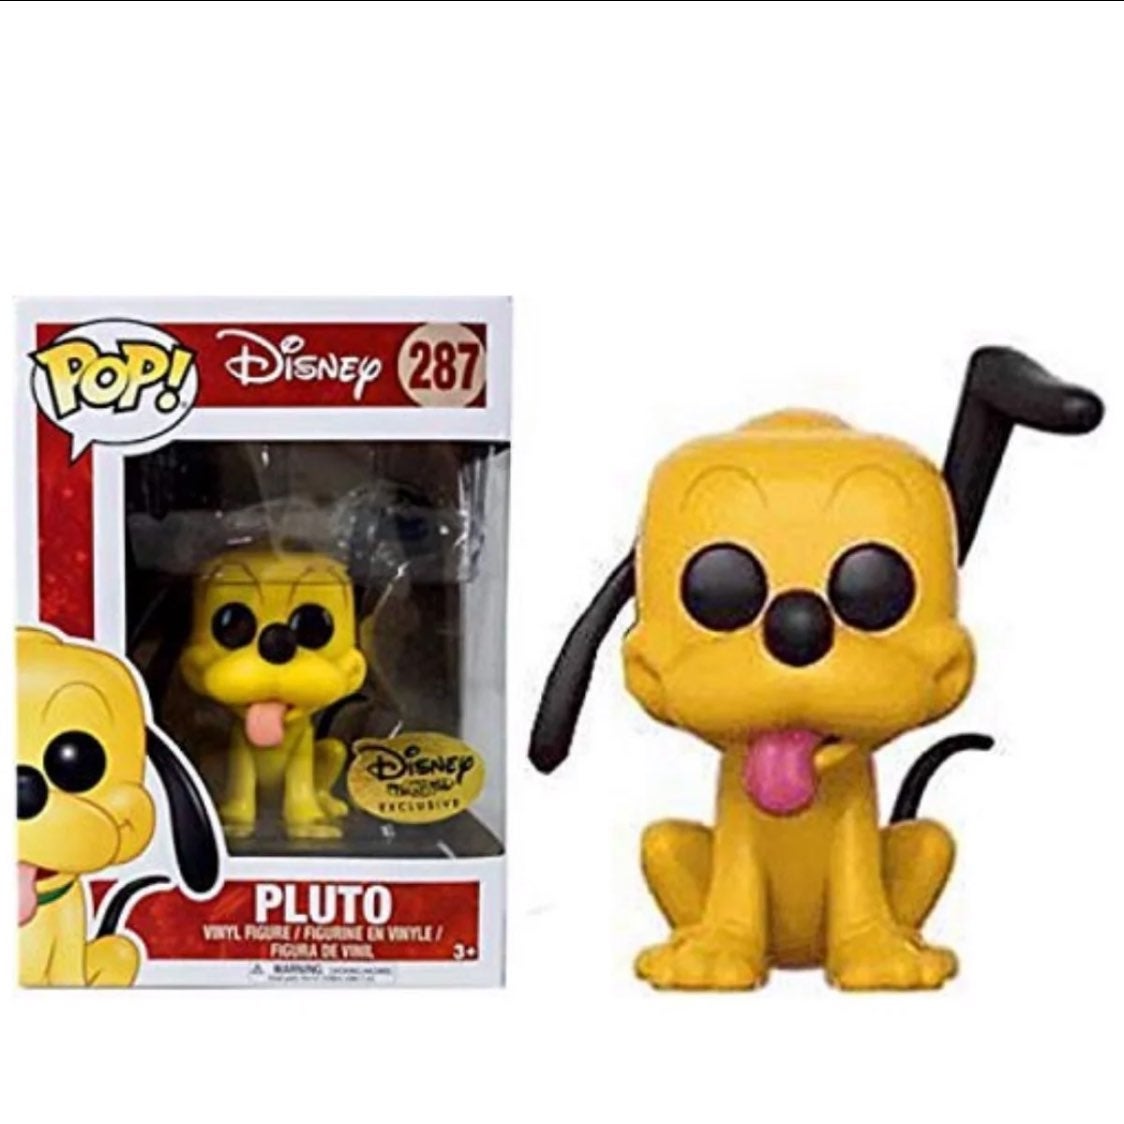 Disney Pop! Vinyl Figure Pluto [287 